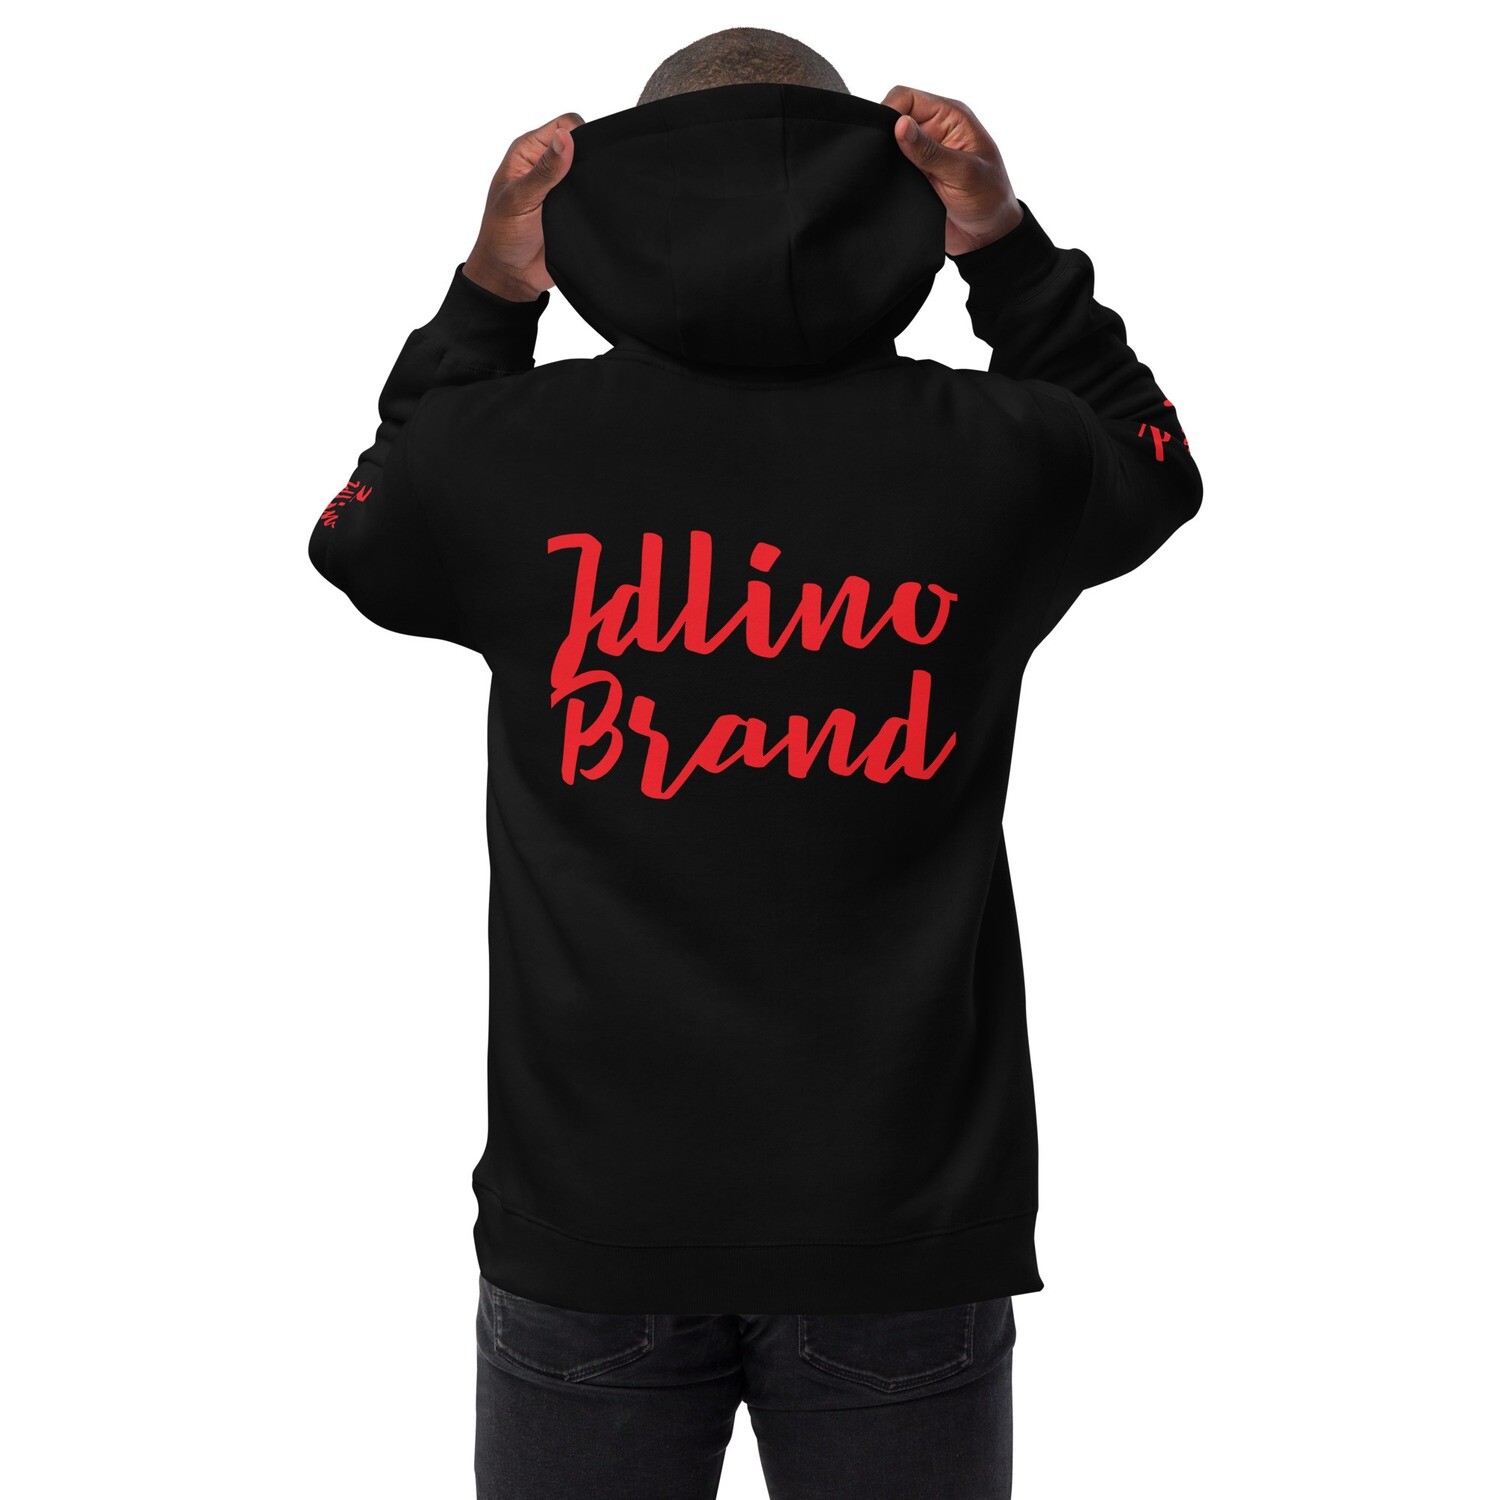 Jdlino brand Unisex fashion hoodie